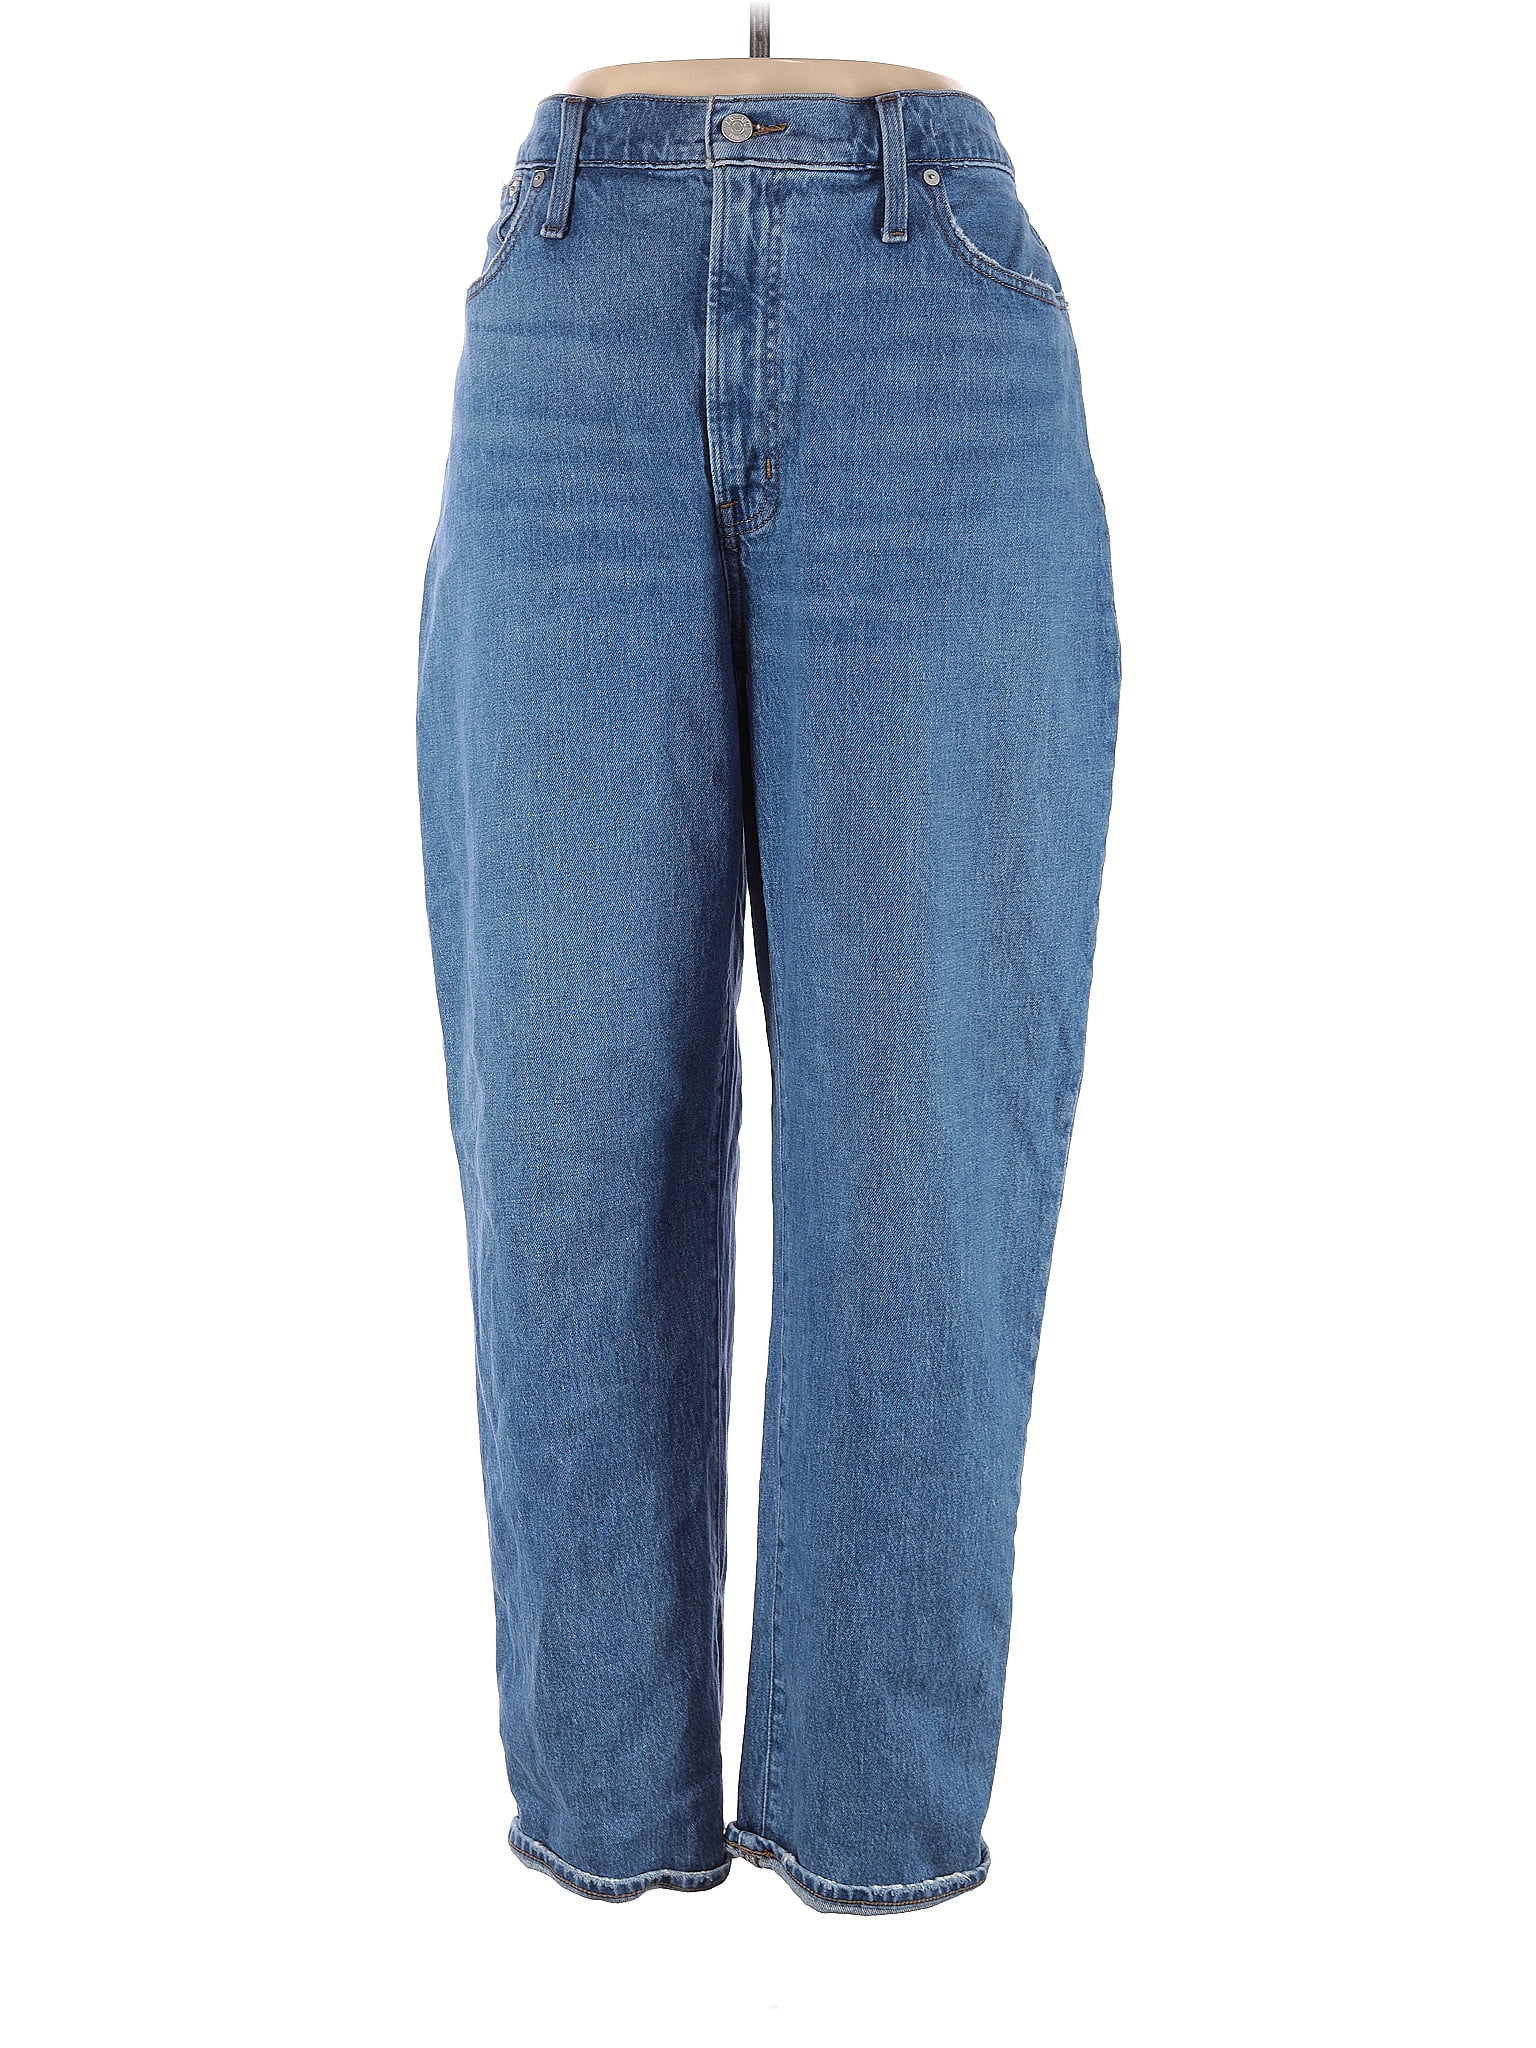 Madewell Solid Blue Jeans 33 Waist - 67% off | thredUP